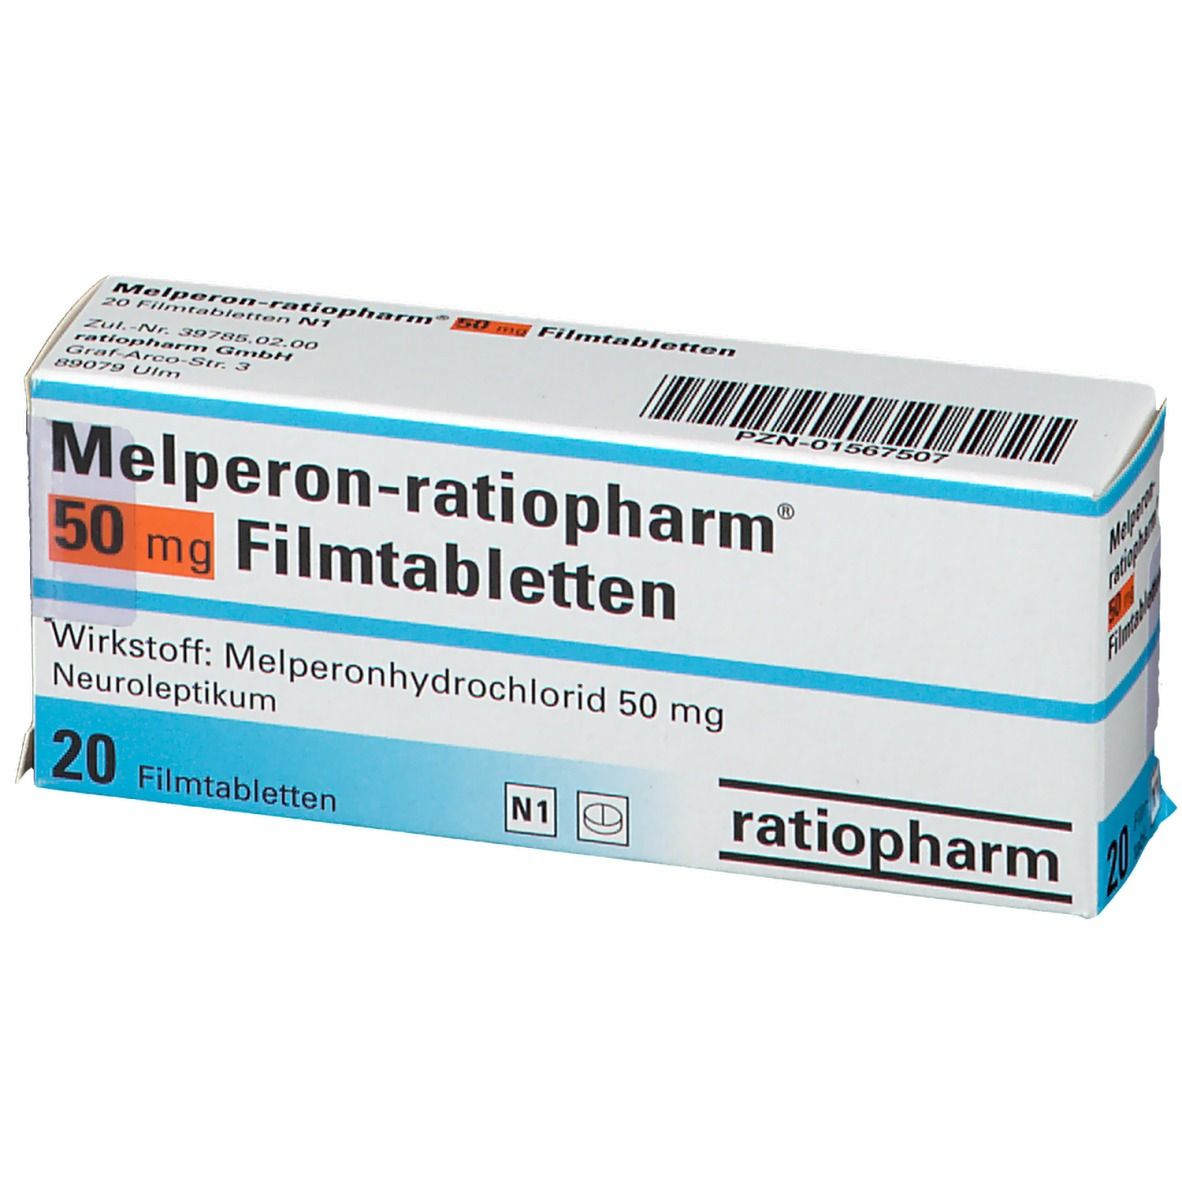 Melperon-ratiopharm® 50 mg